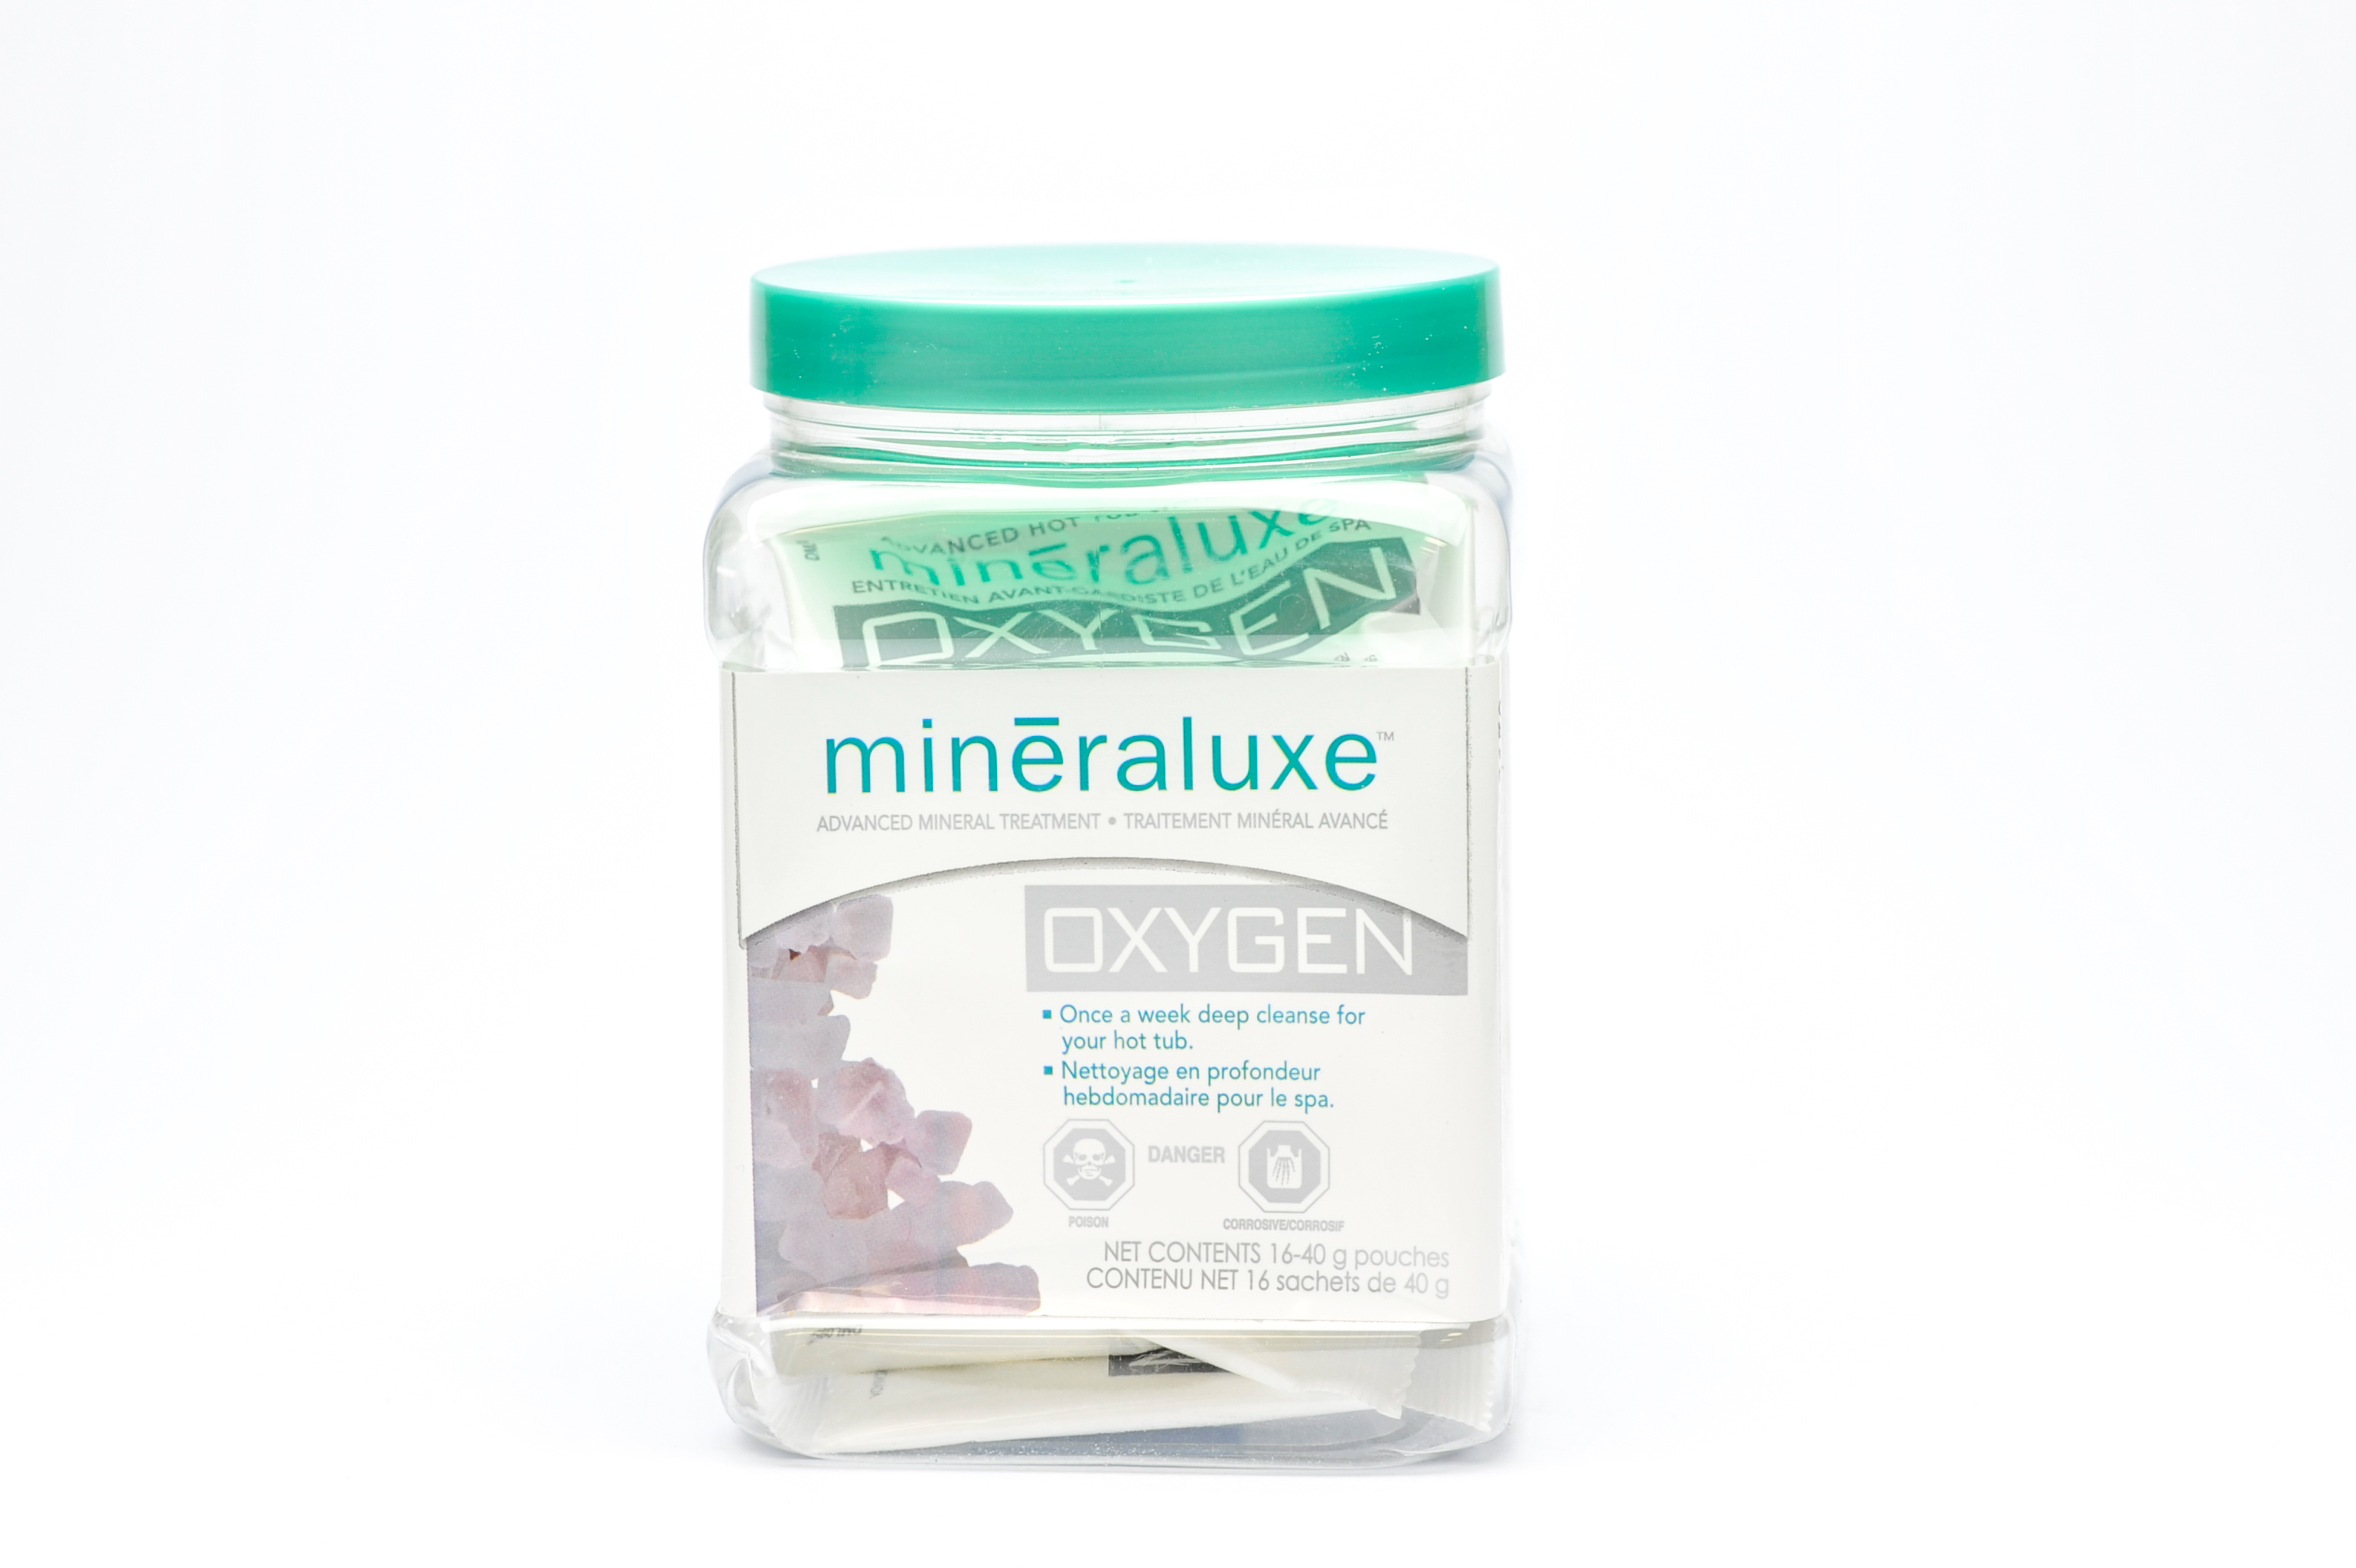 Mineraluxe Oxygen Plus 8 Per Case - VINYL REPAIR KITS